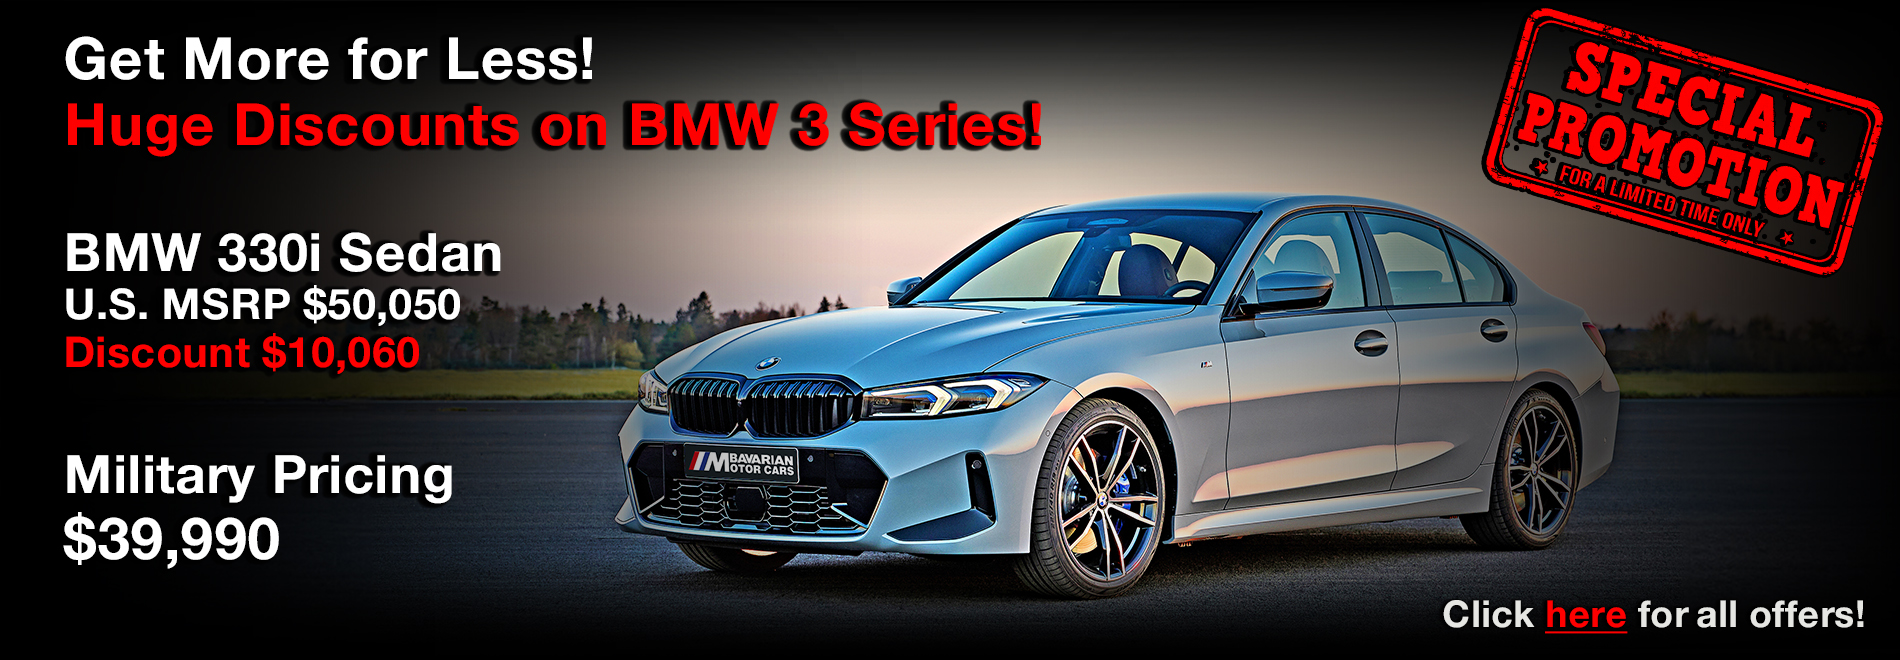 BMW Military Sales | Bavarian Motor Cars  | Special Offer  |  BMW Sale | BMW 330i | 3 Series